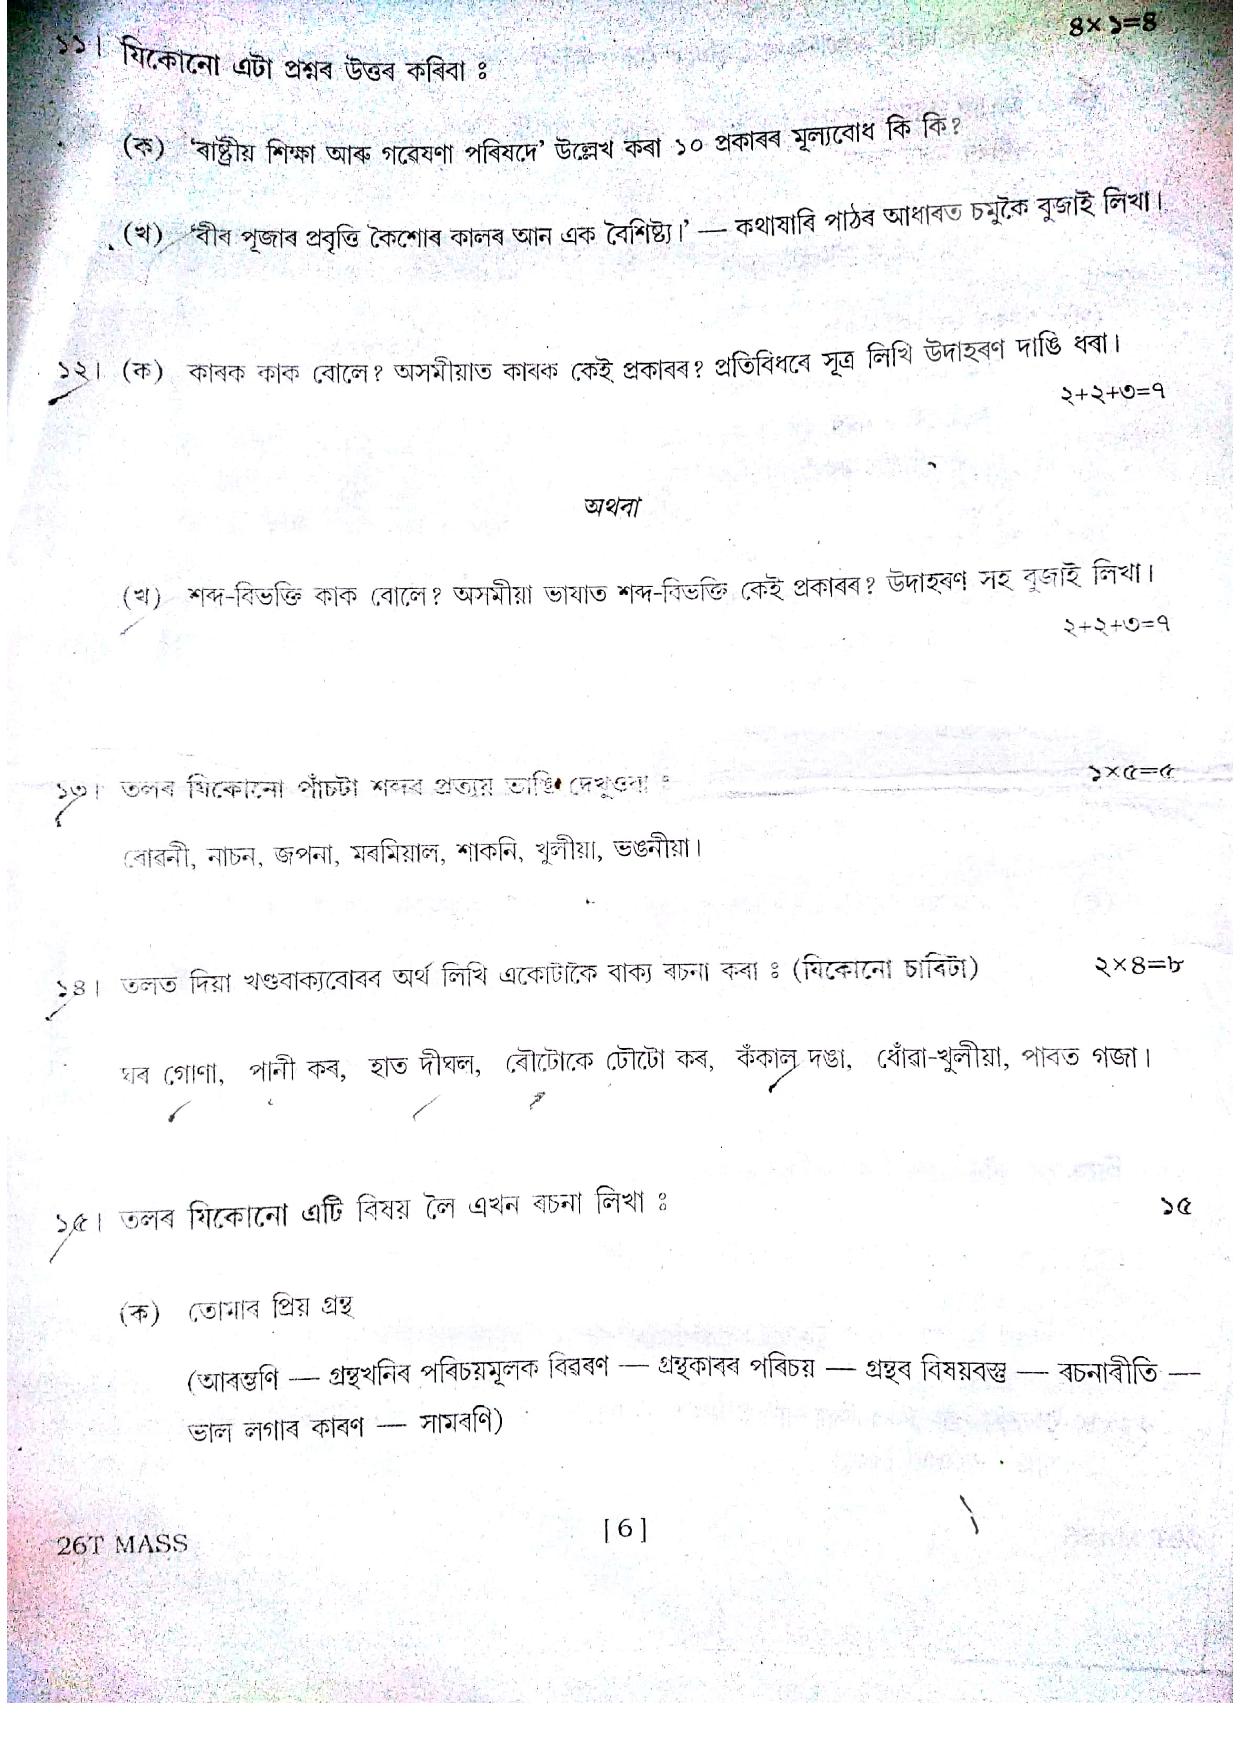 Assam HS 2nd Year Assamese MIL 2016 Question Paper - Page 6